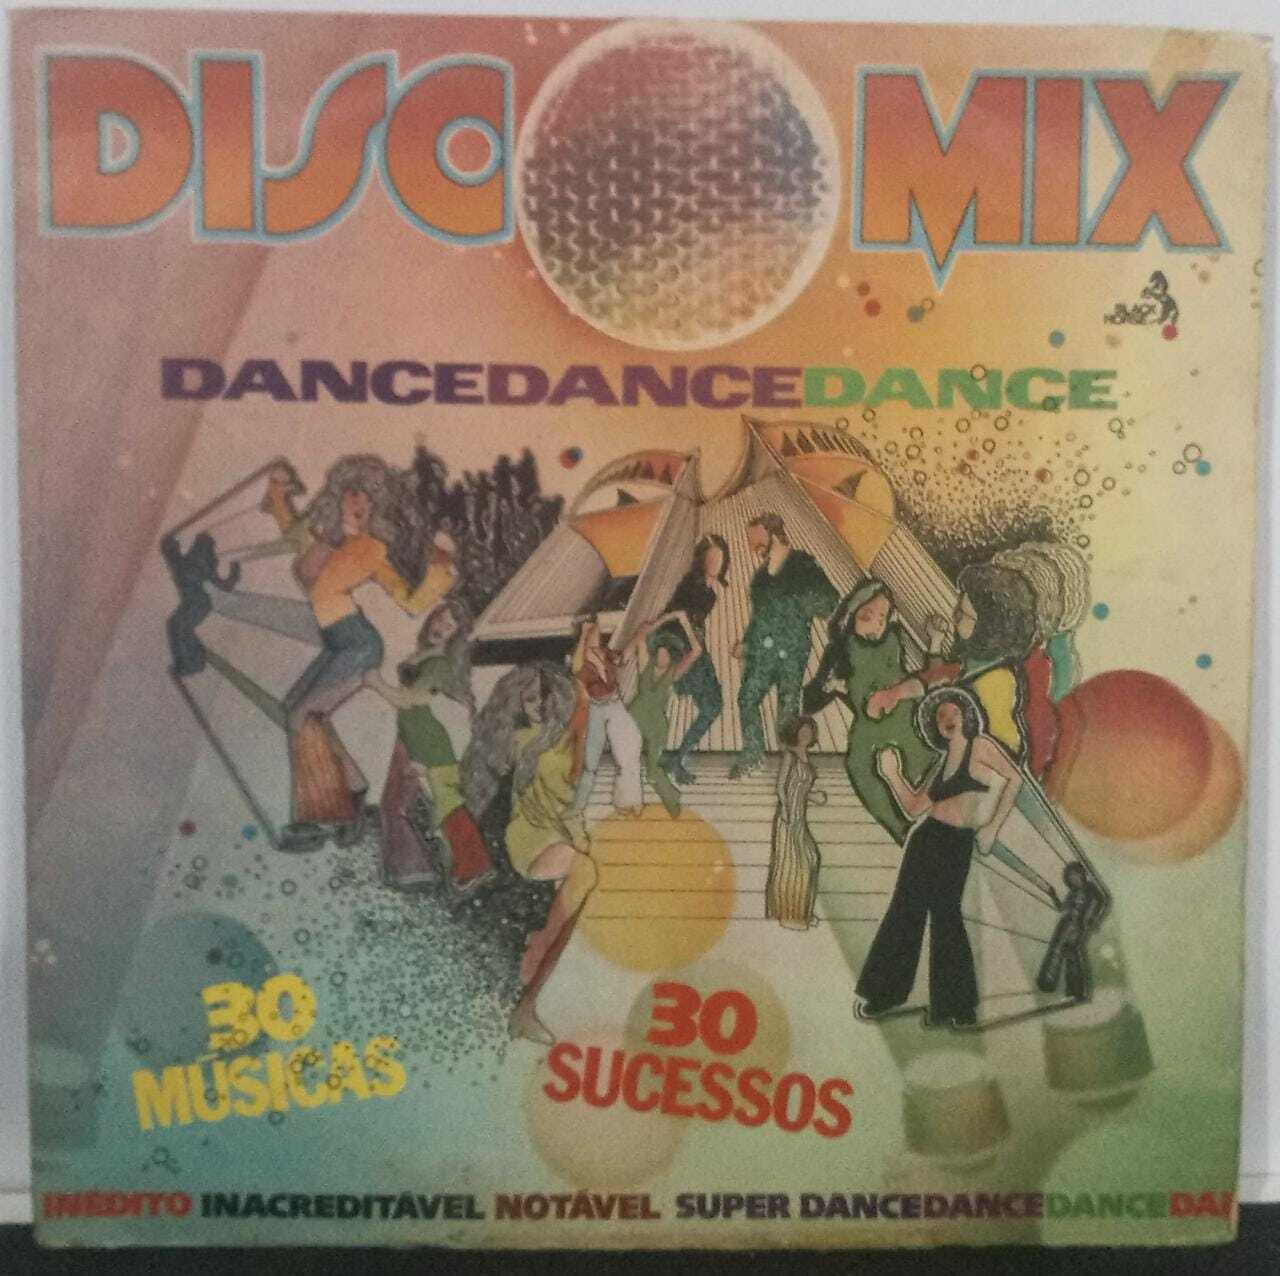 Vinil - Disco Mix - DanceDanceDance